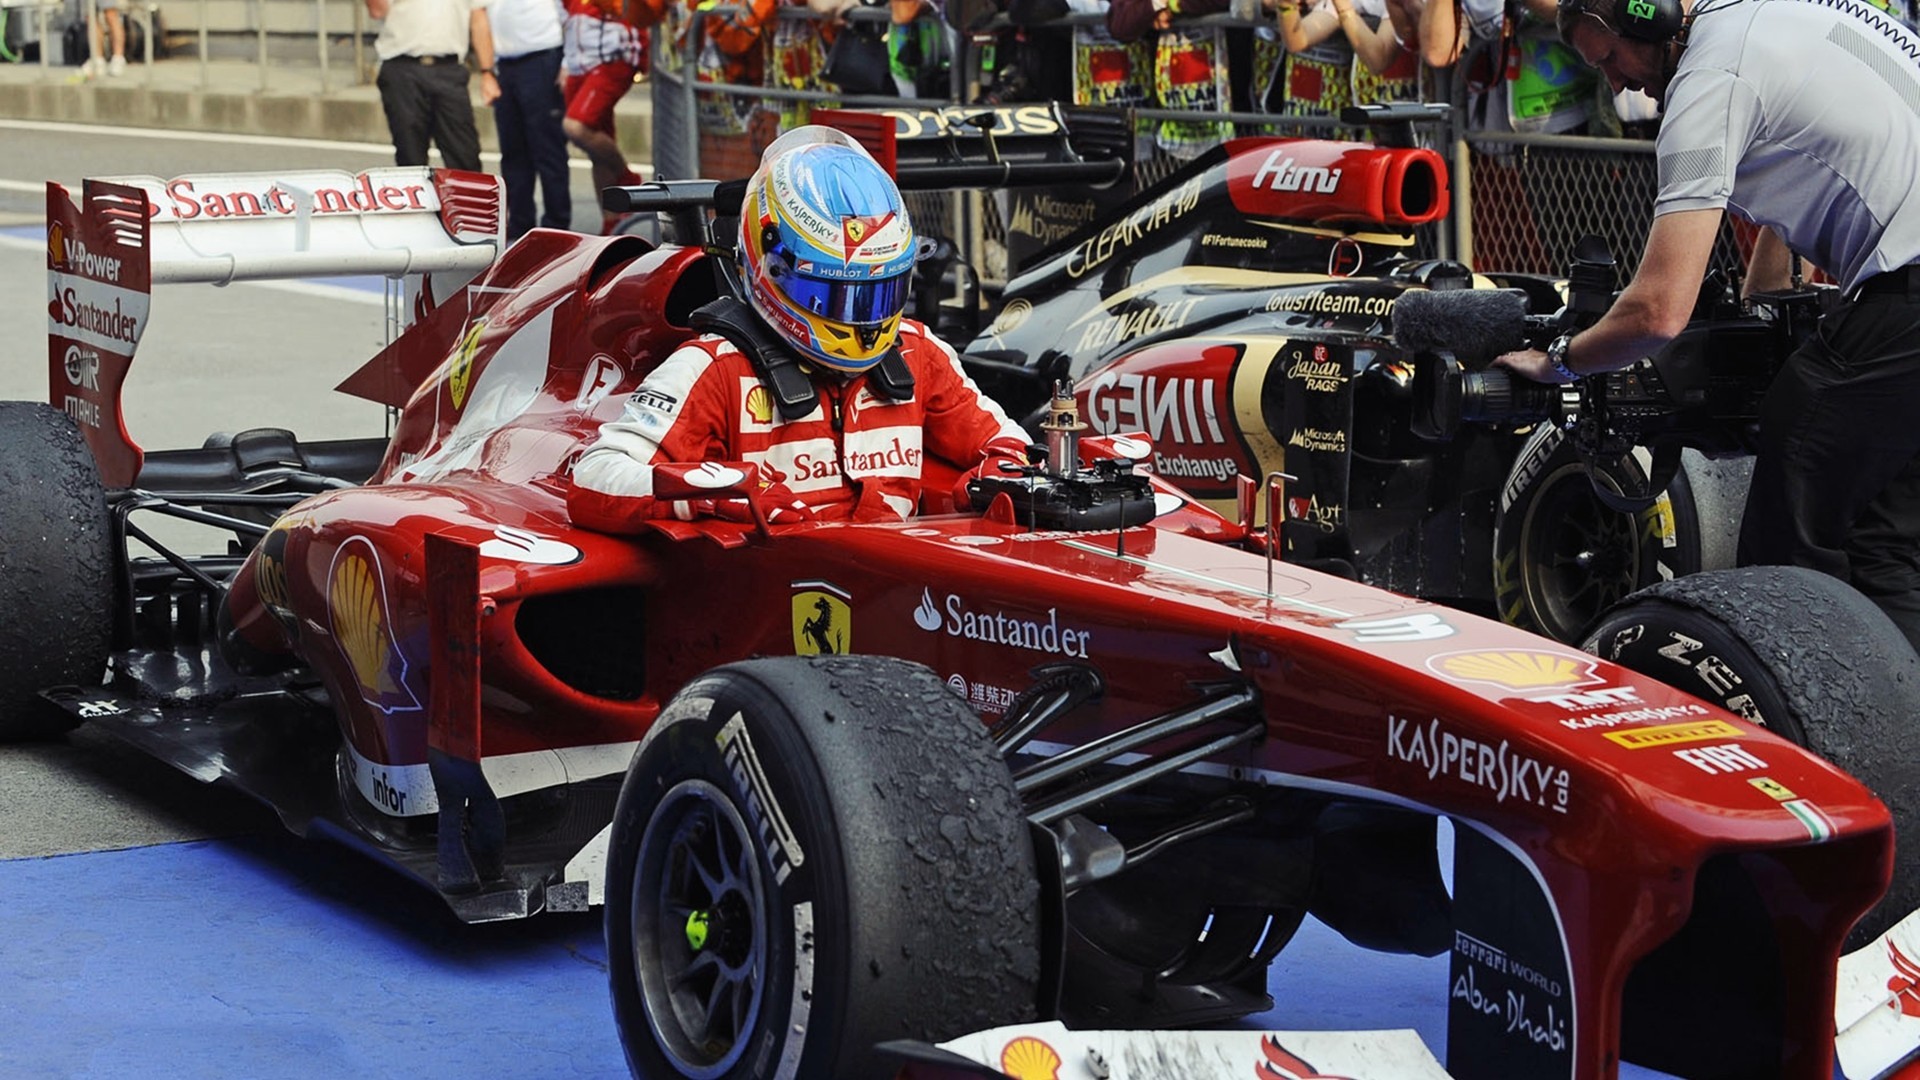 General 1920x1080 Formula 1 car red cars racing vehicle sport motorsport Racing driver